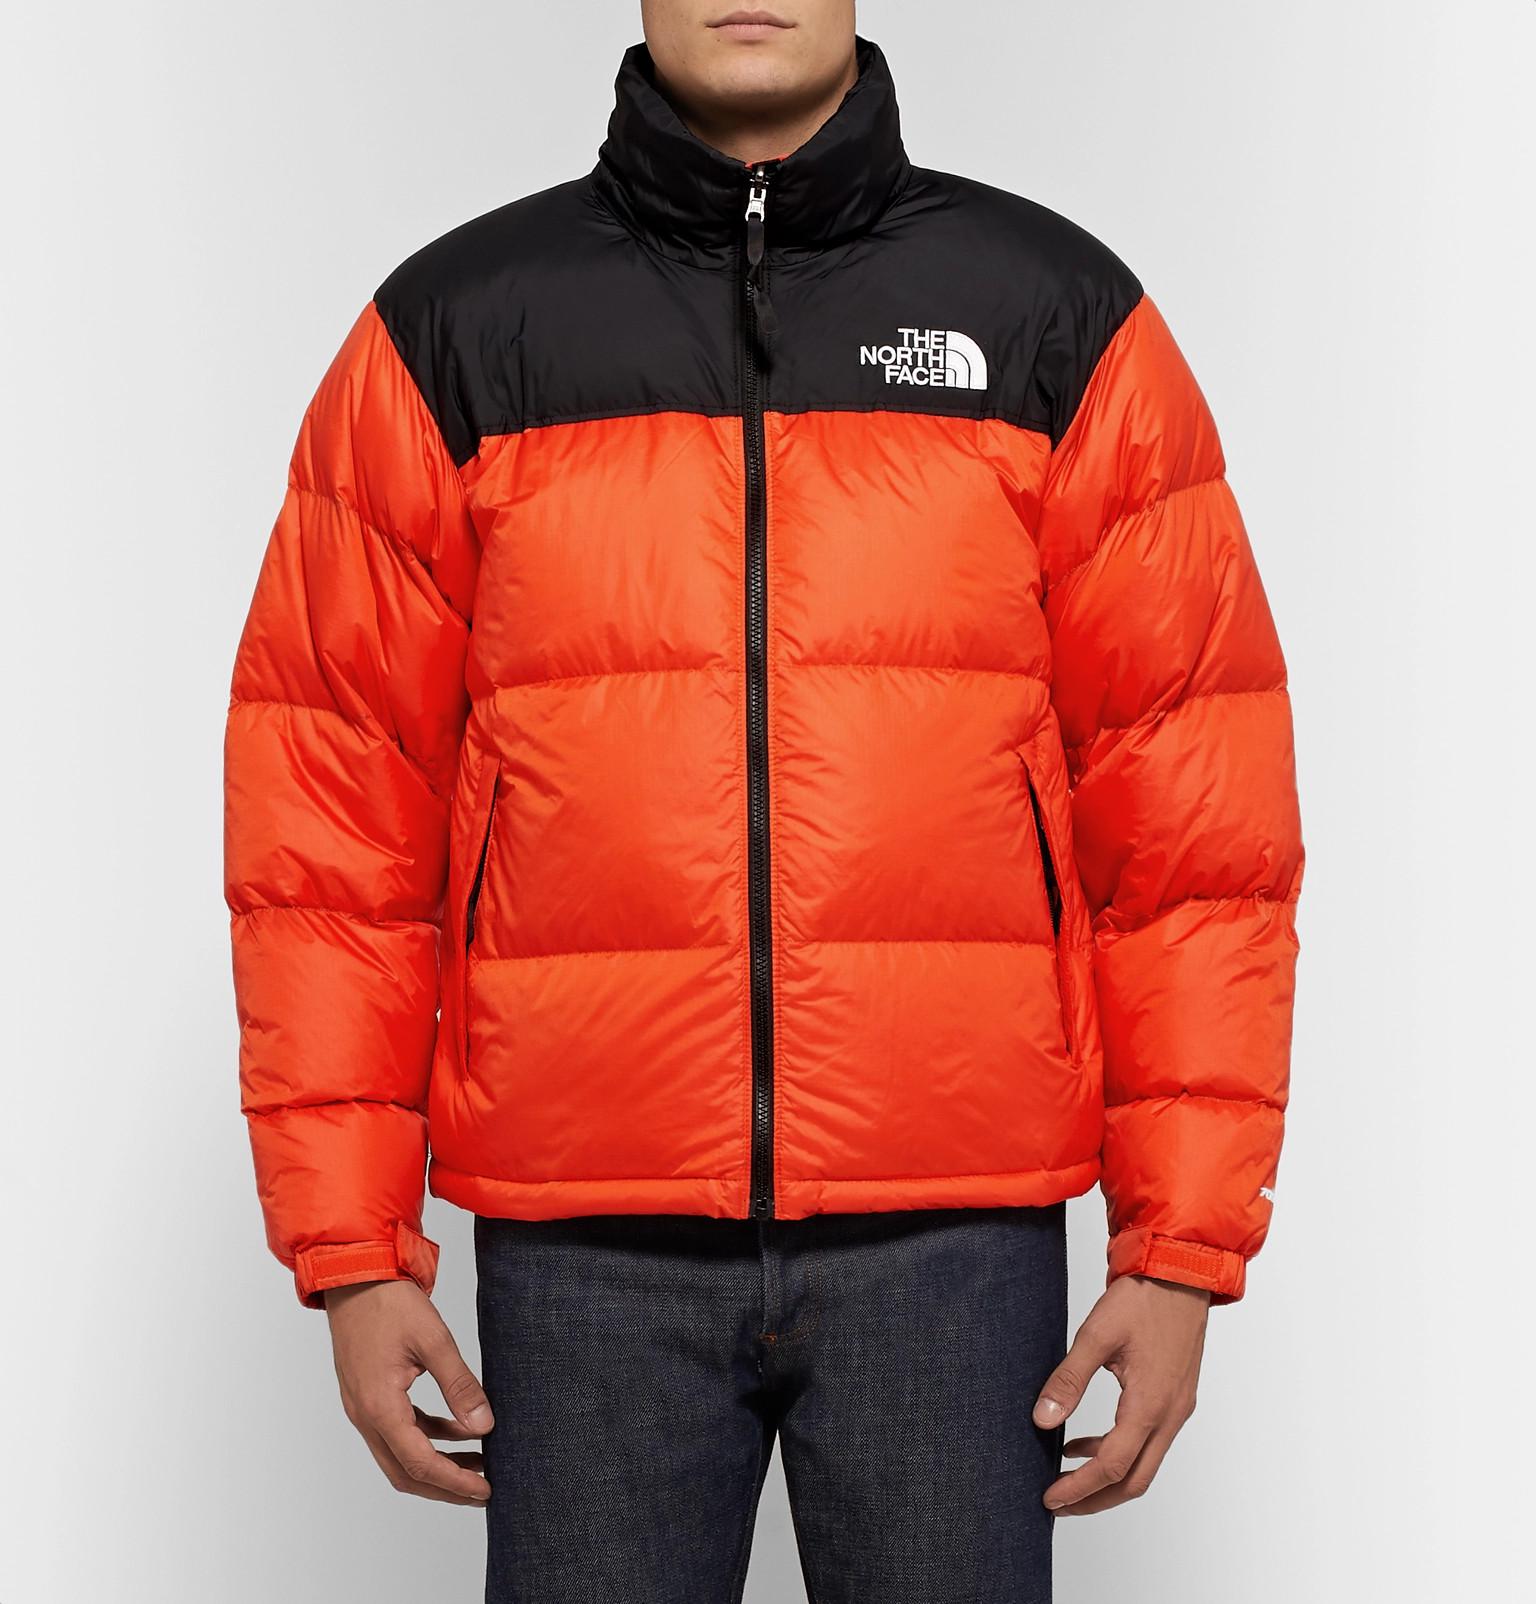 north face jacket orange and black